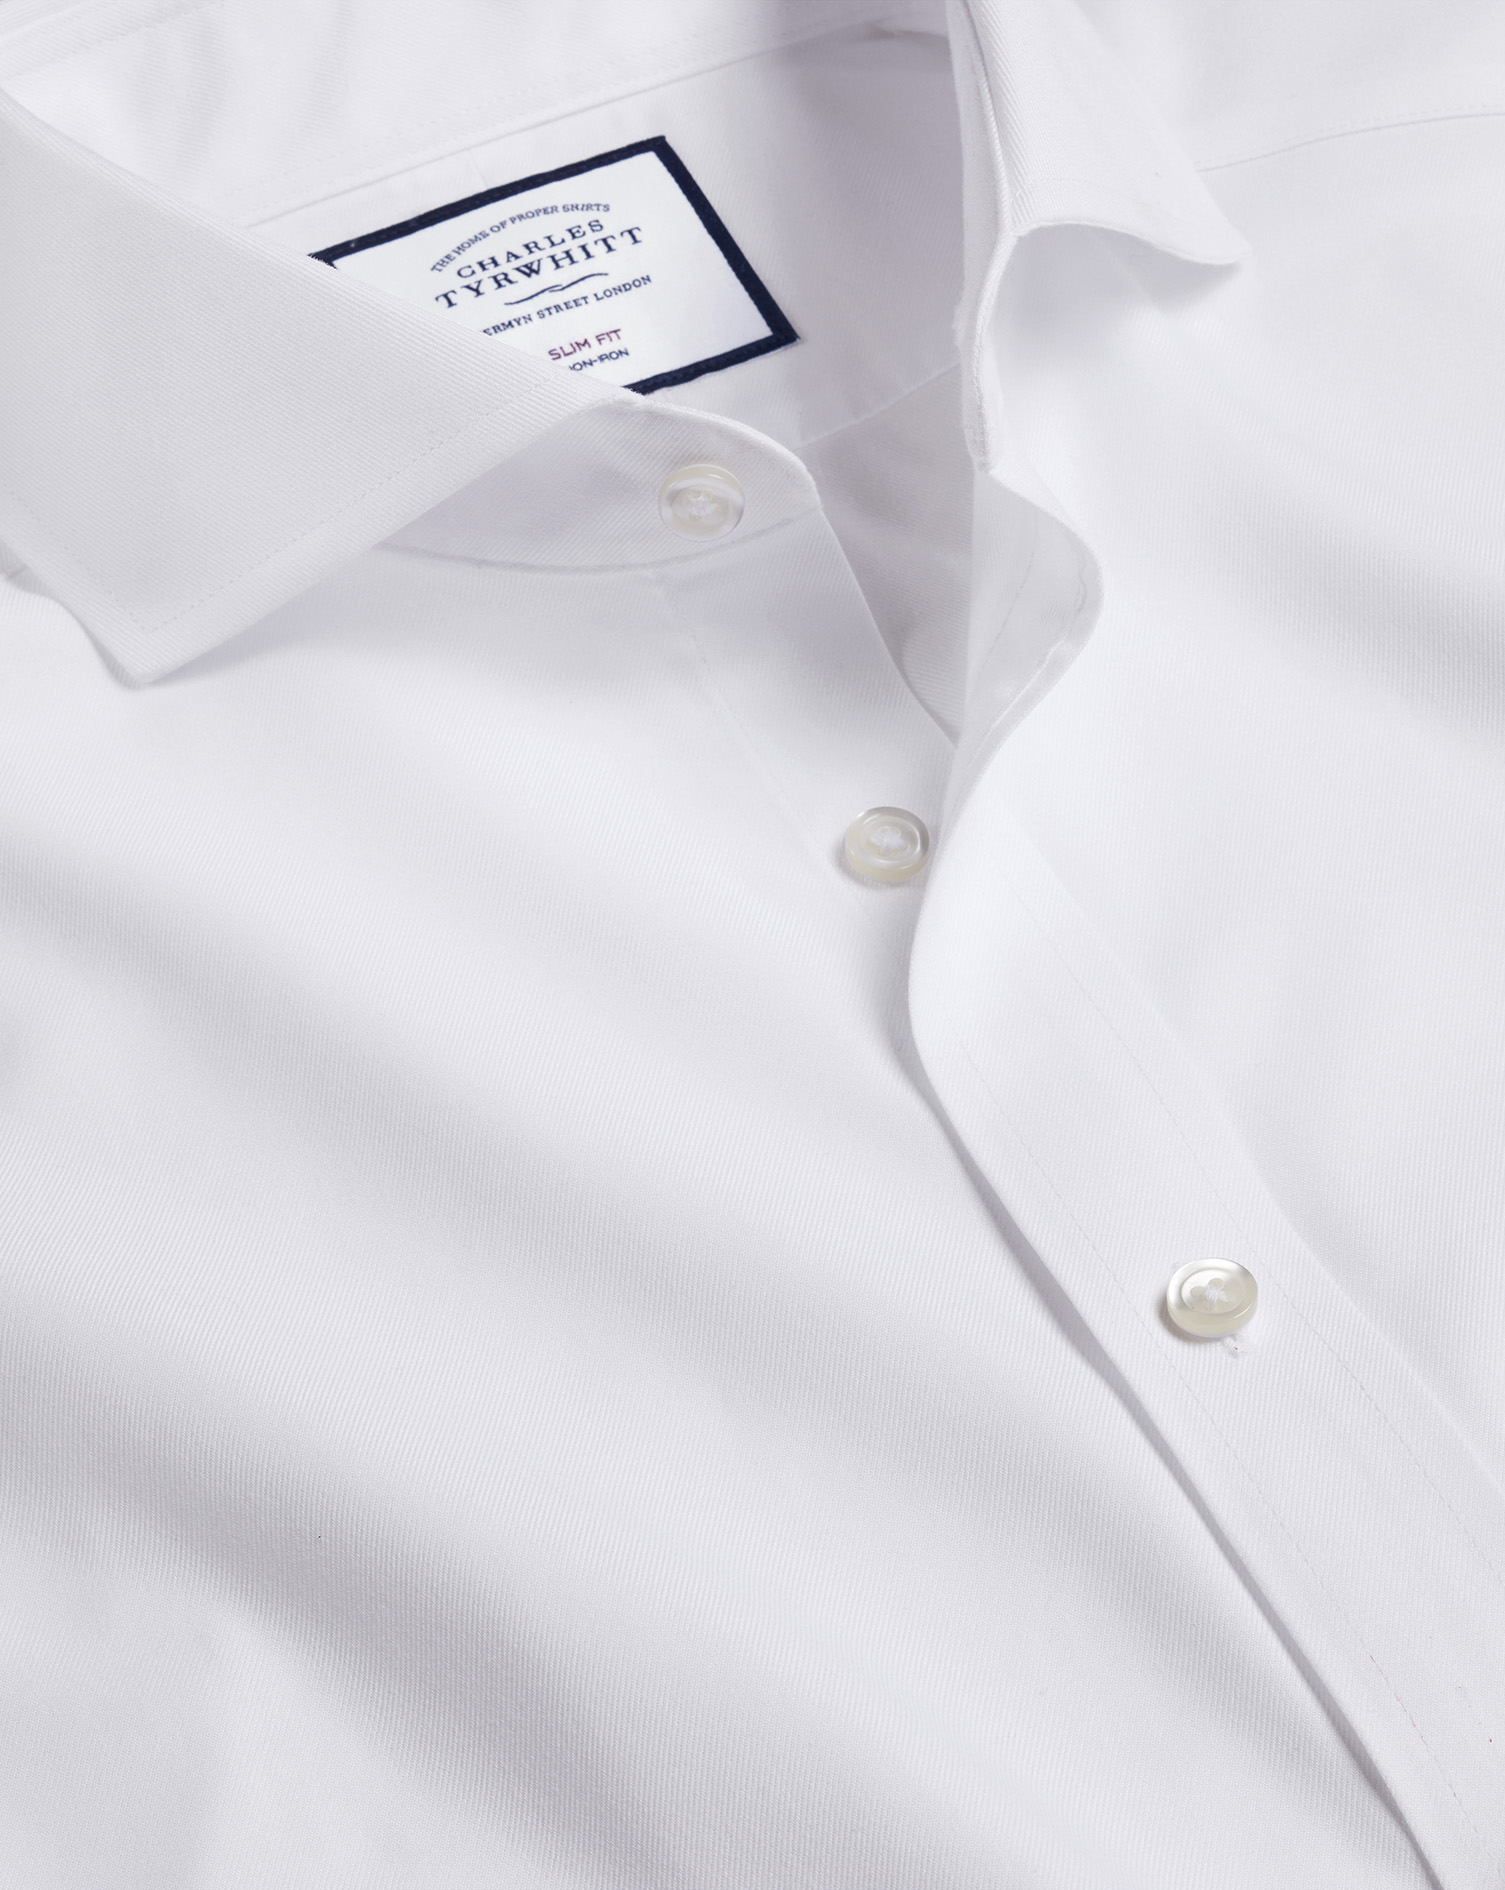 Extreme Cutaway Collar Non-Iron Twill Cotton Dress Shirt - White French Cuff Size Medium
